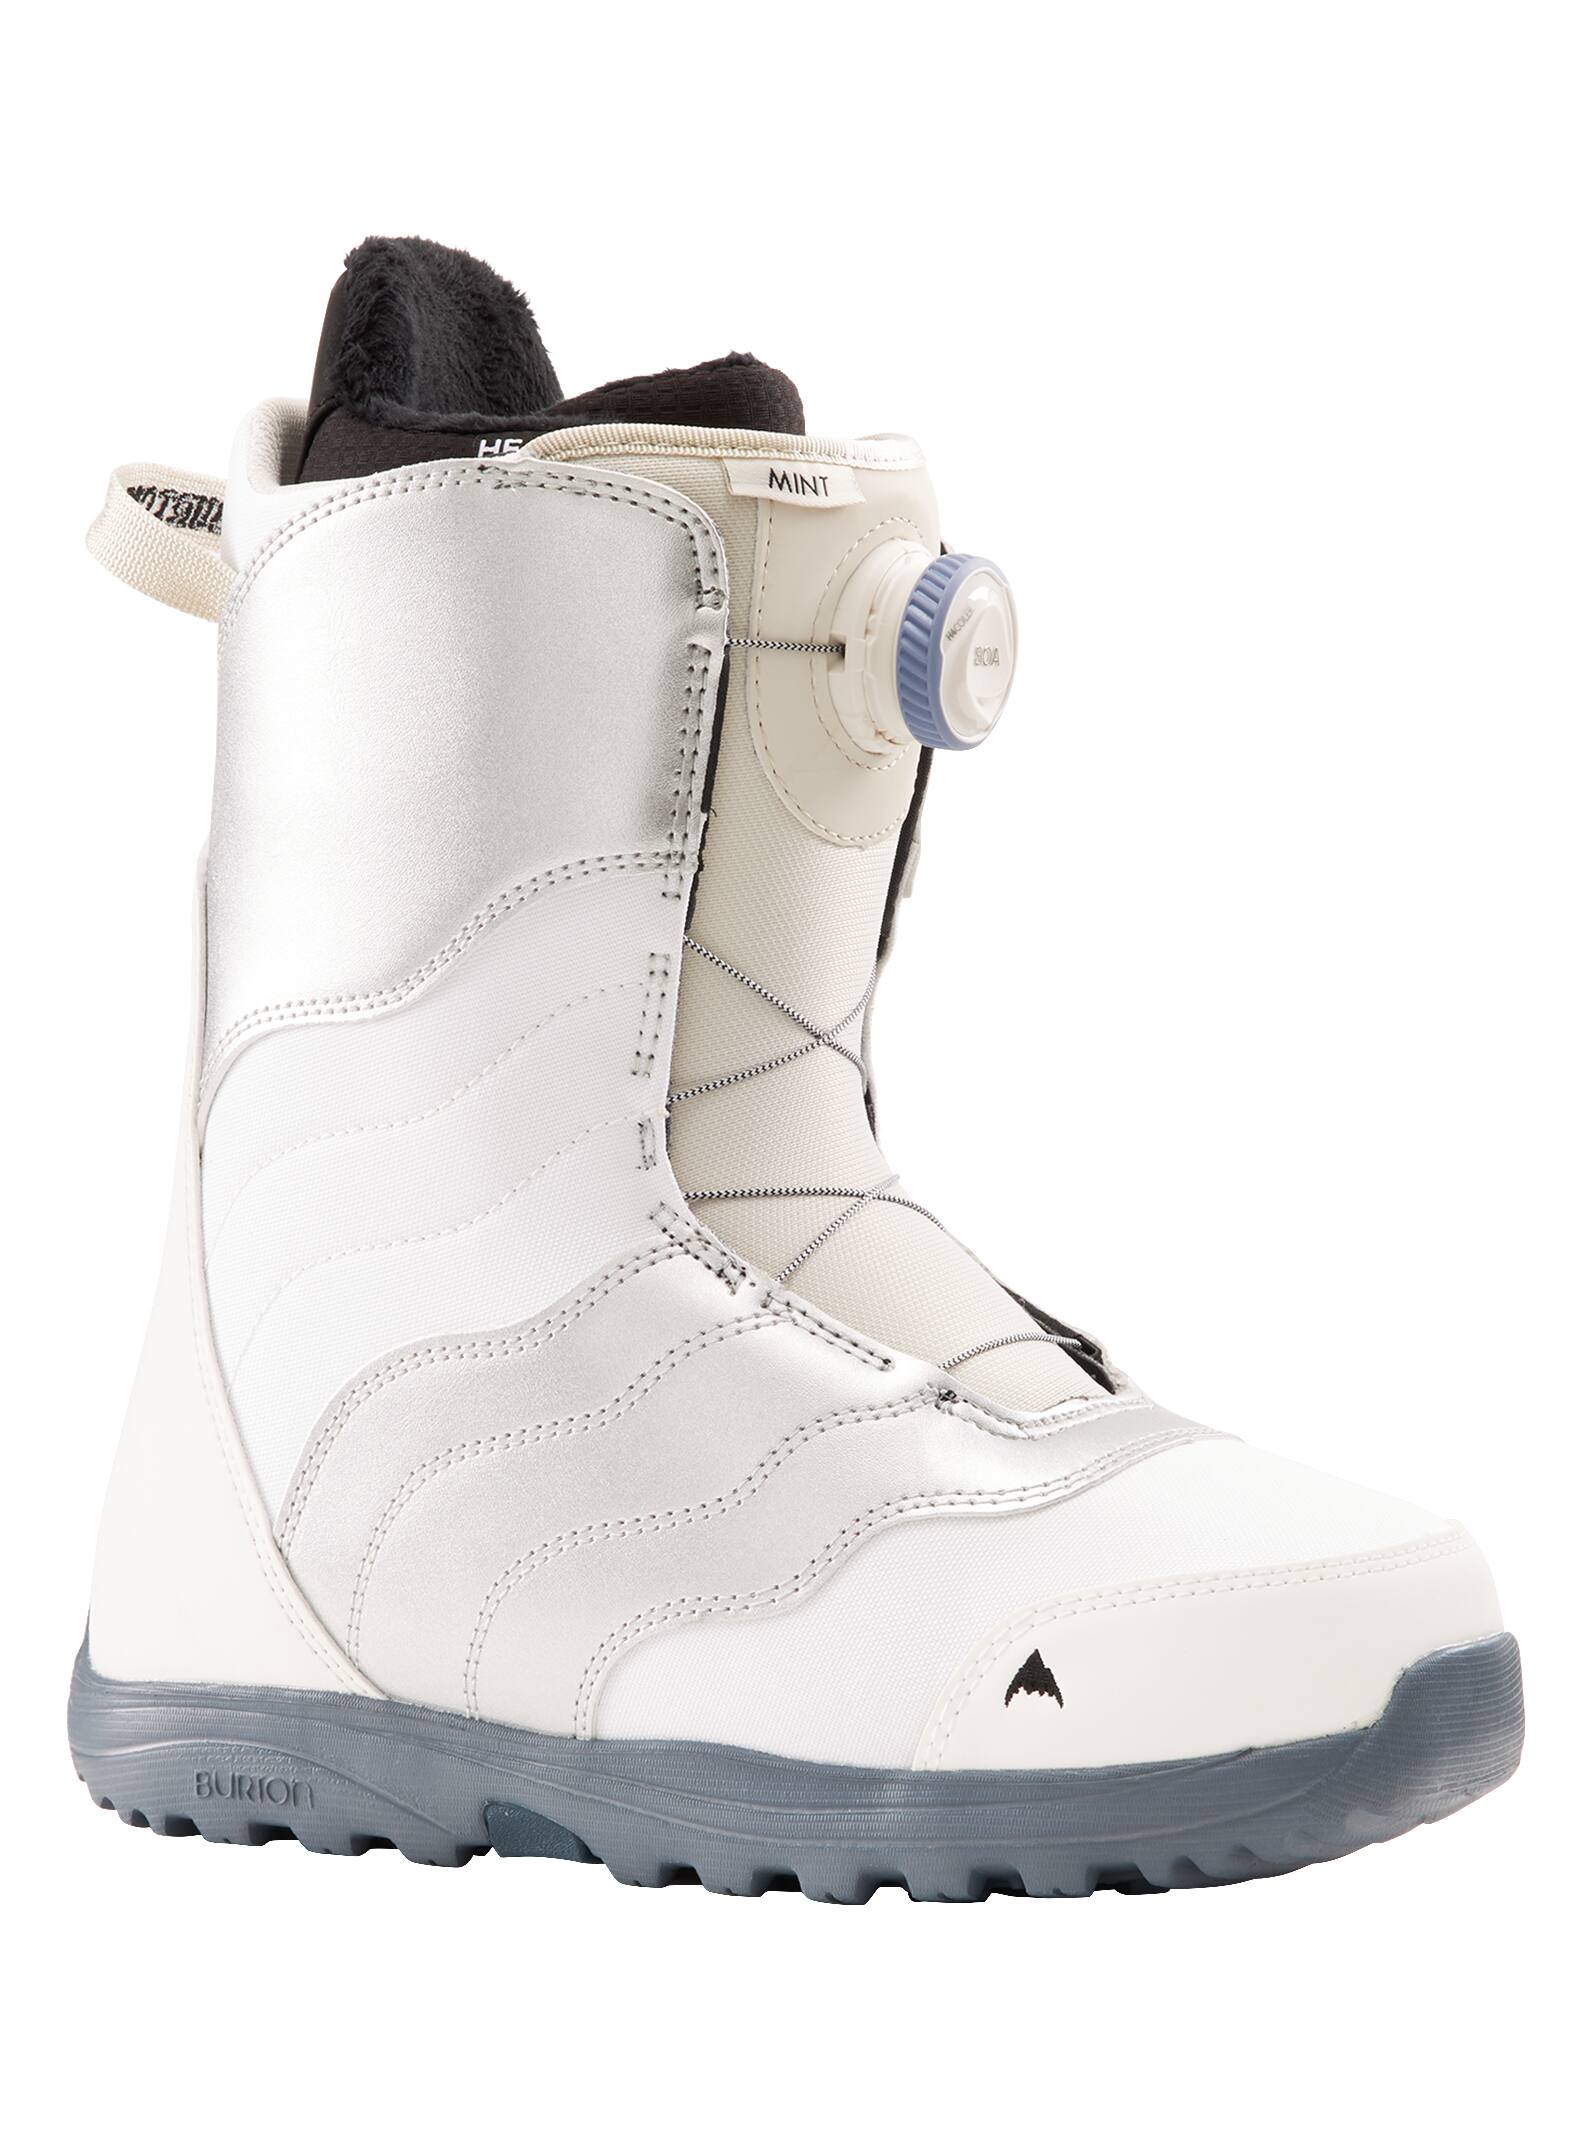 Burton Mint Snowboarding Snow Boots Ladies Womens Black UK 5.5 39 RRP £169.99 